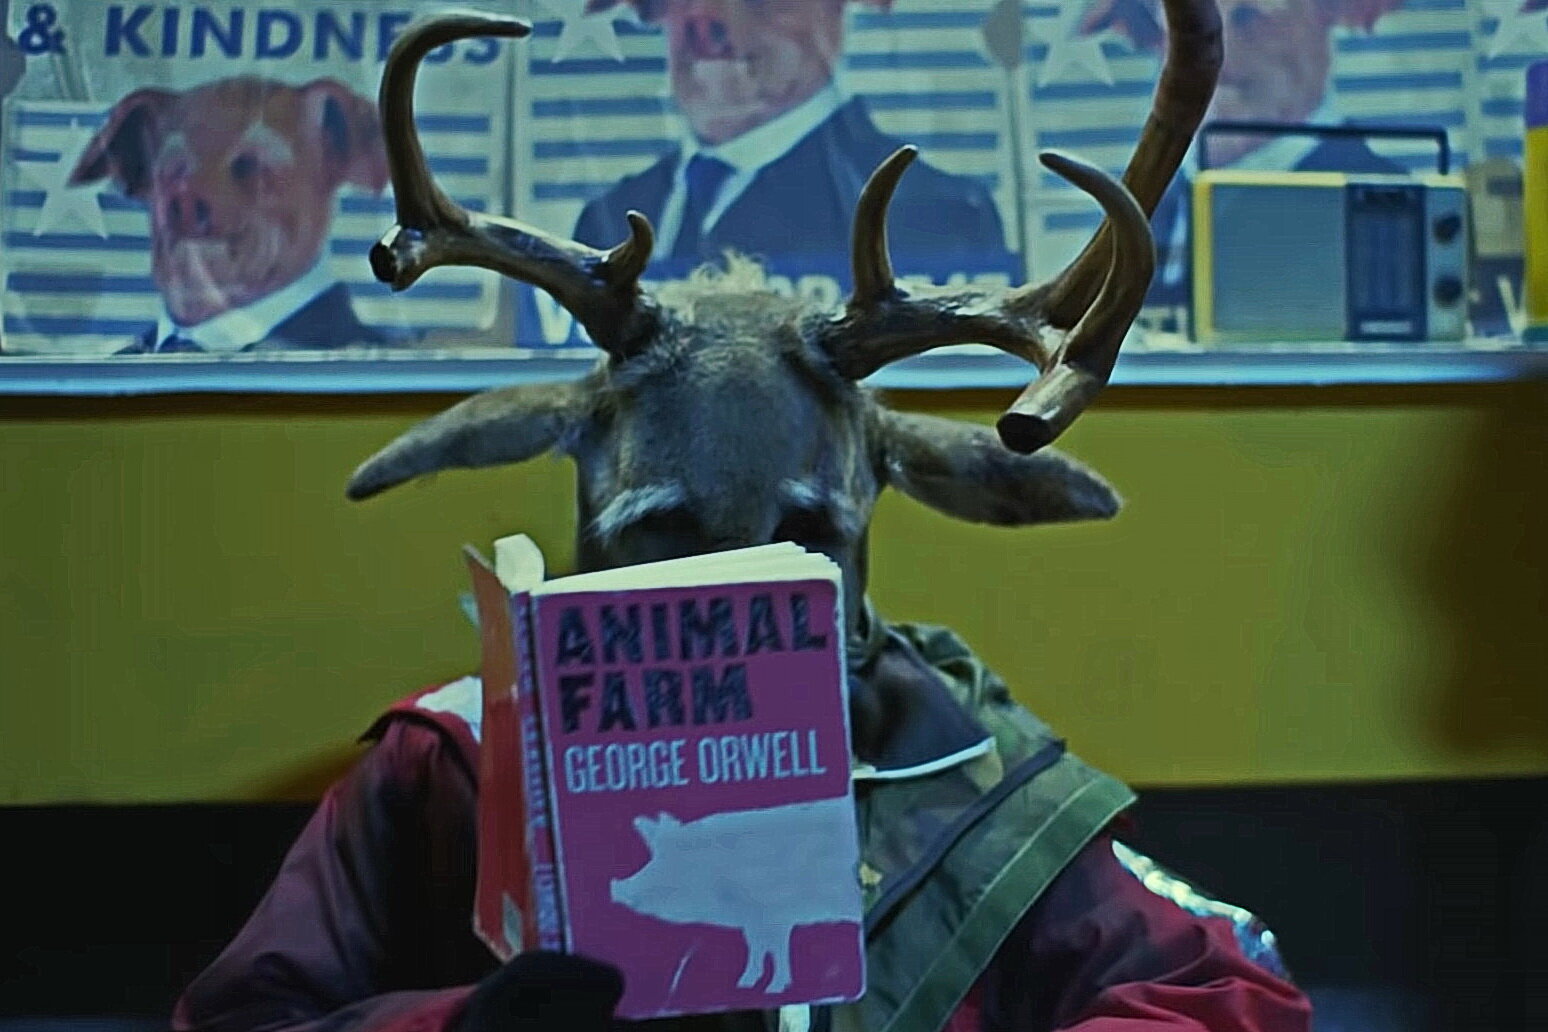 UK band Coldplay brings Orwell’s ‘Animal Farm’ to Kyiv